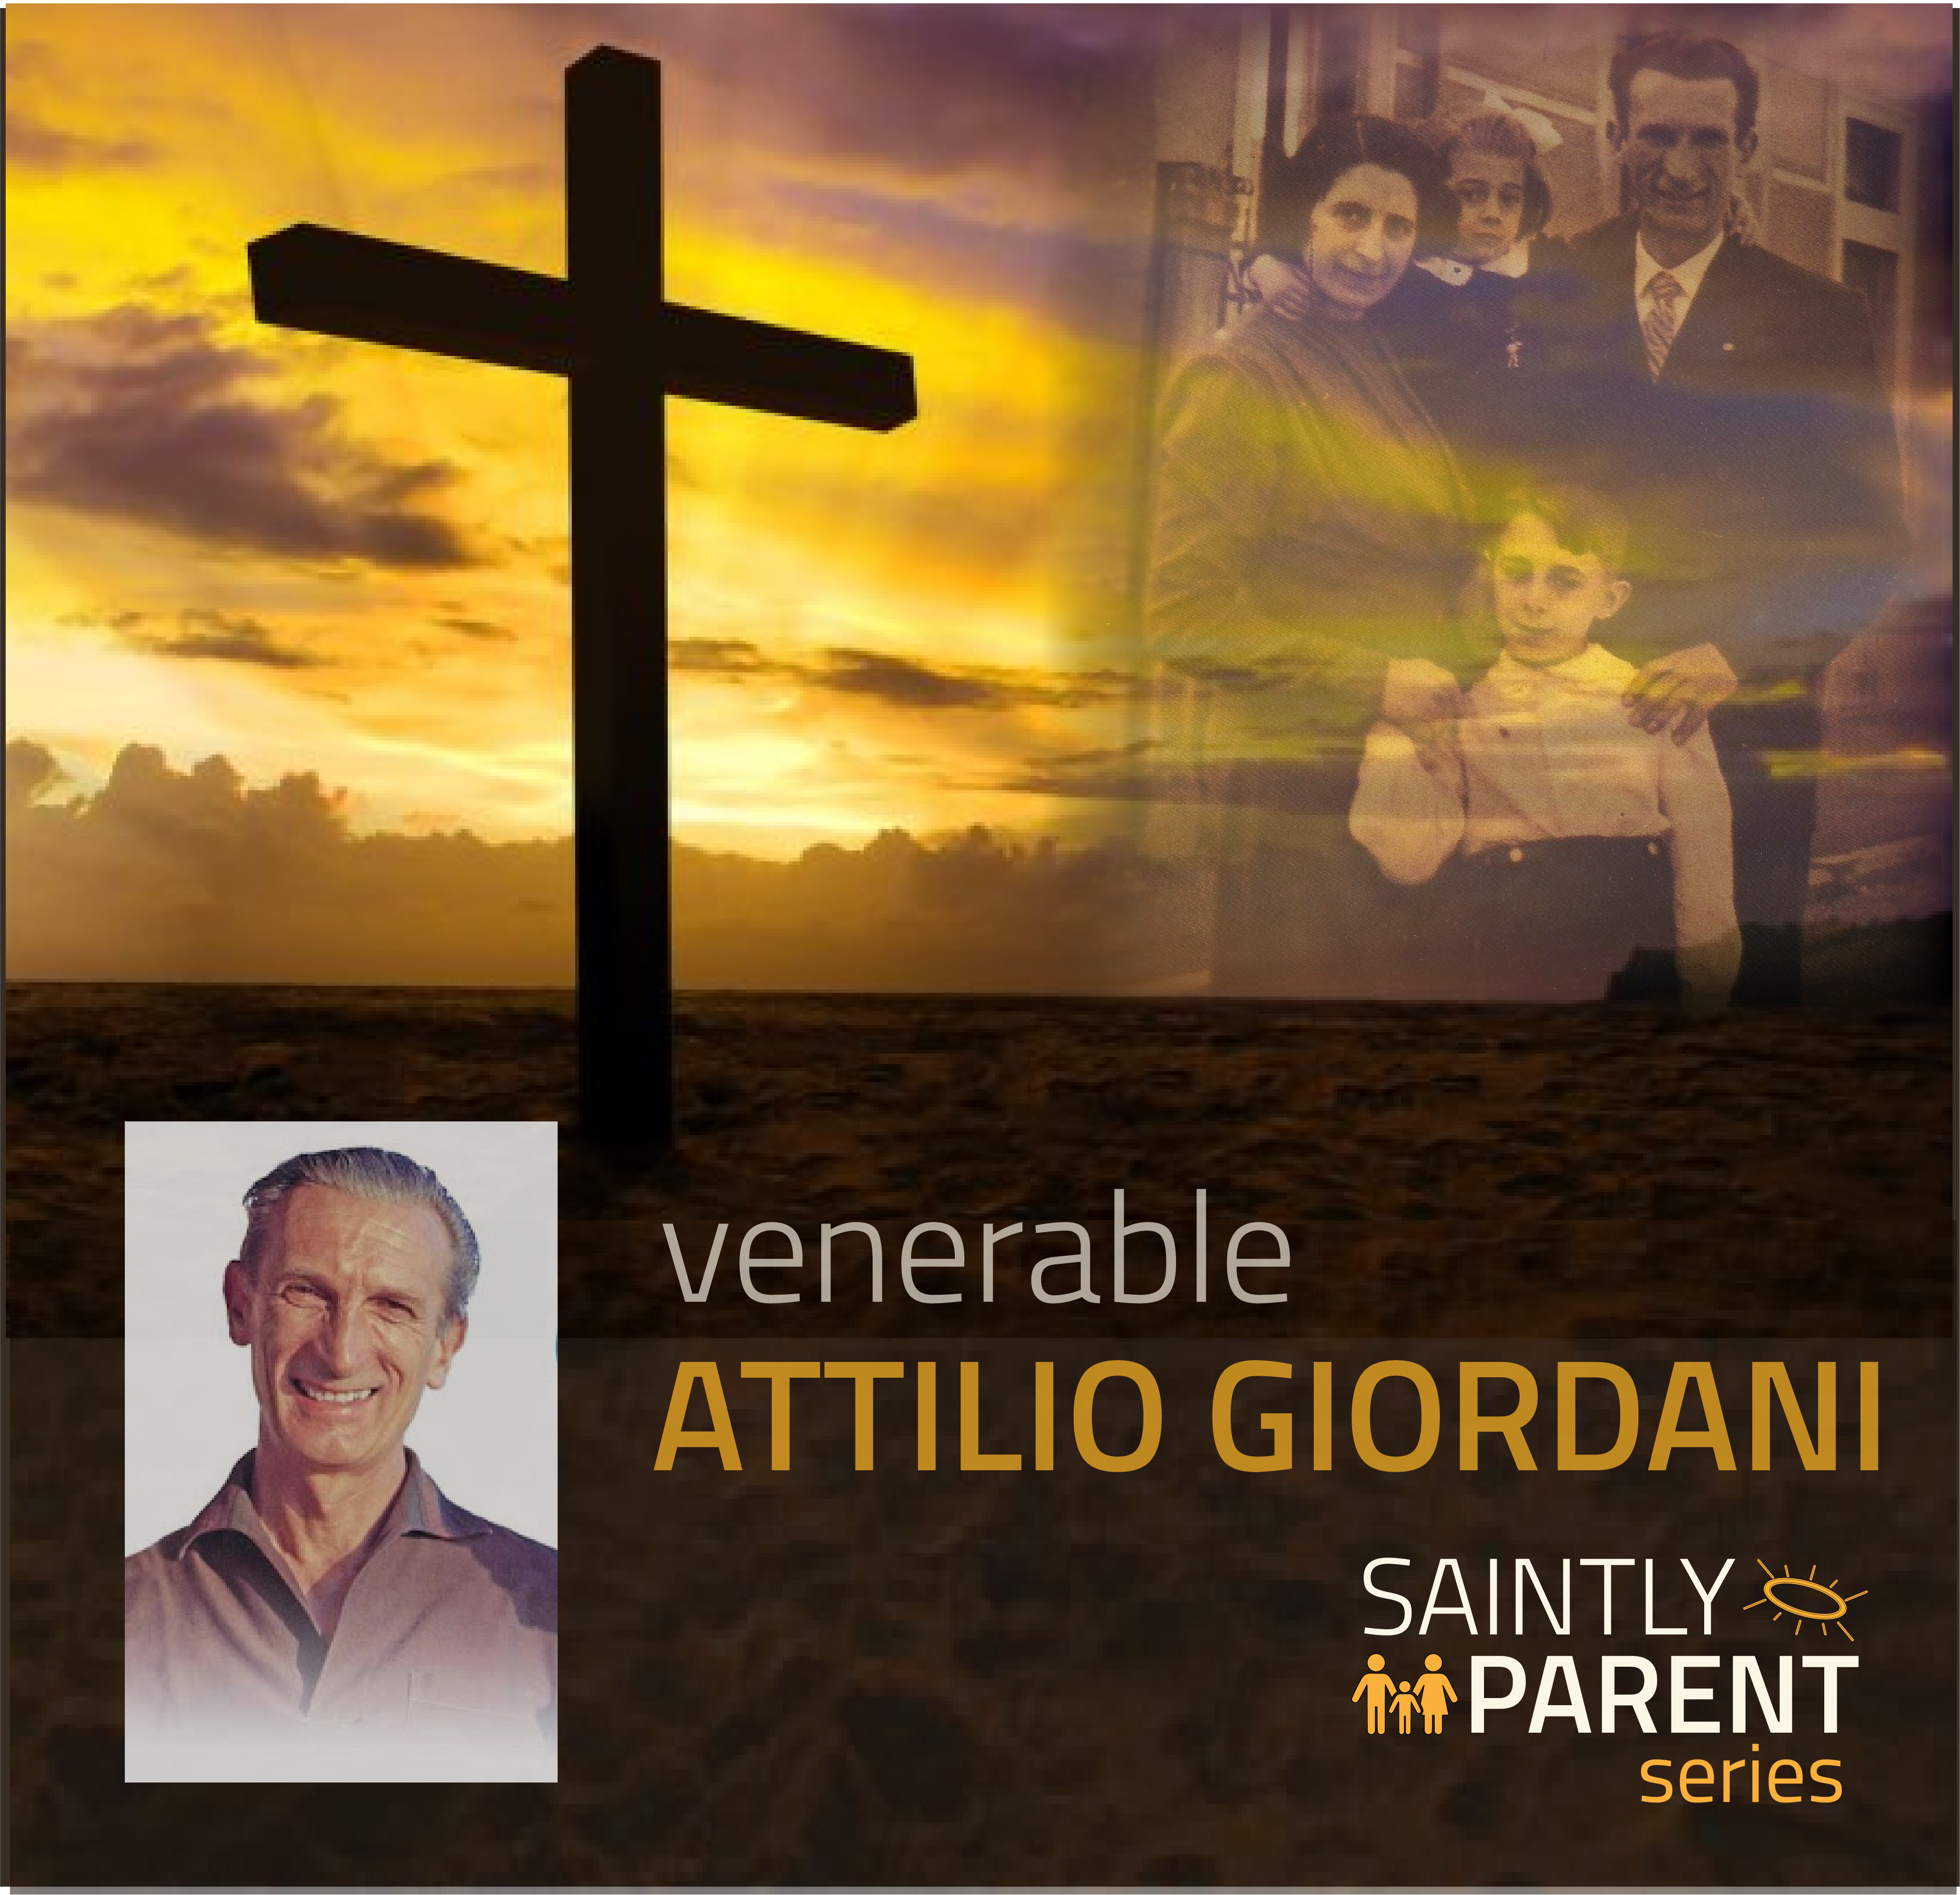 01-Saintly-Parents-Blog-Attilio-Giordani.png